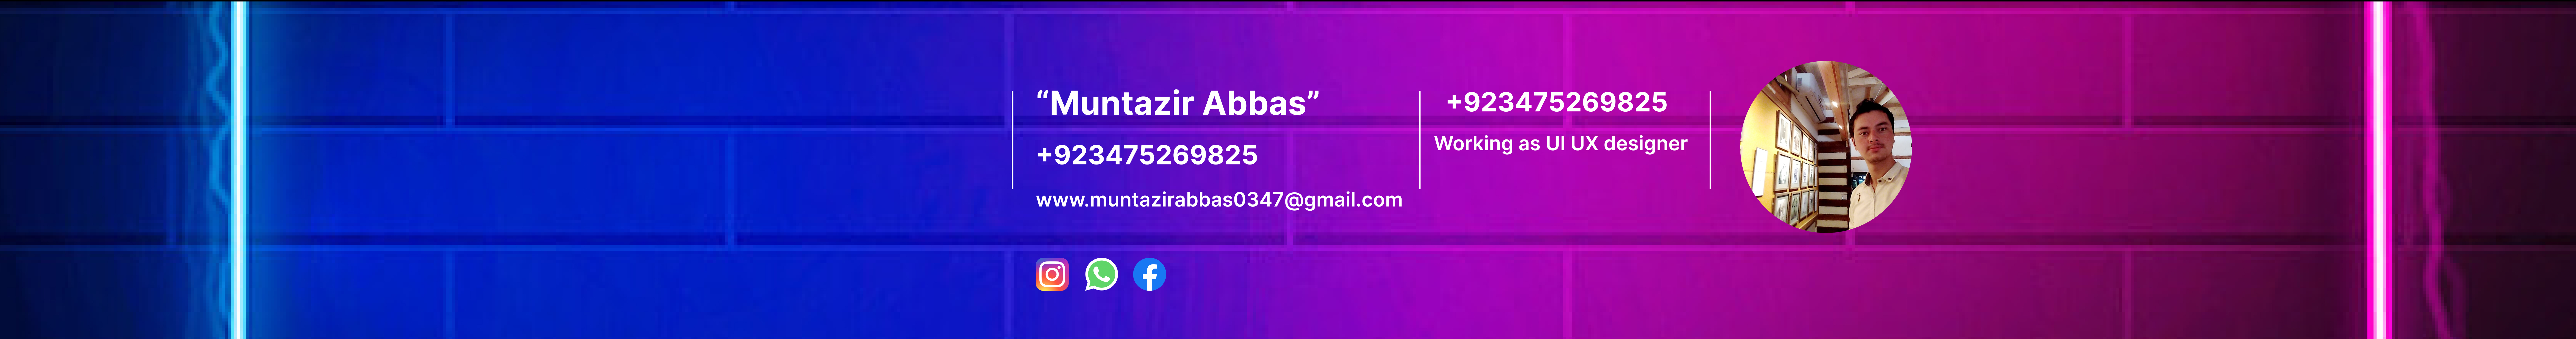 Muntazir Abbas's profile banner